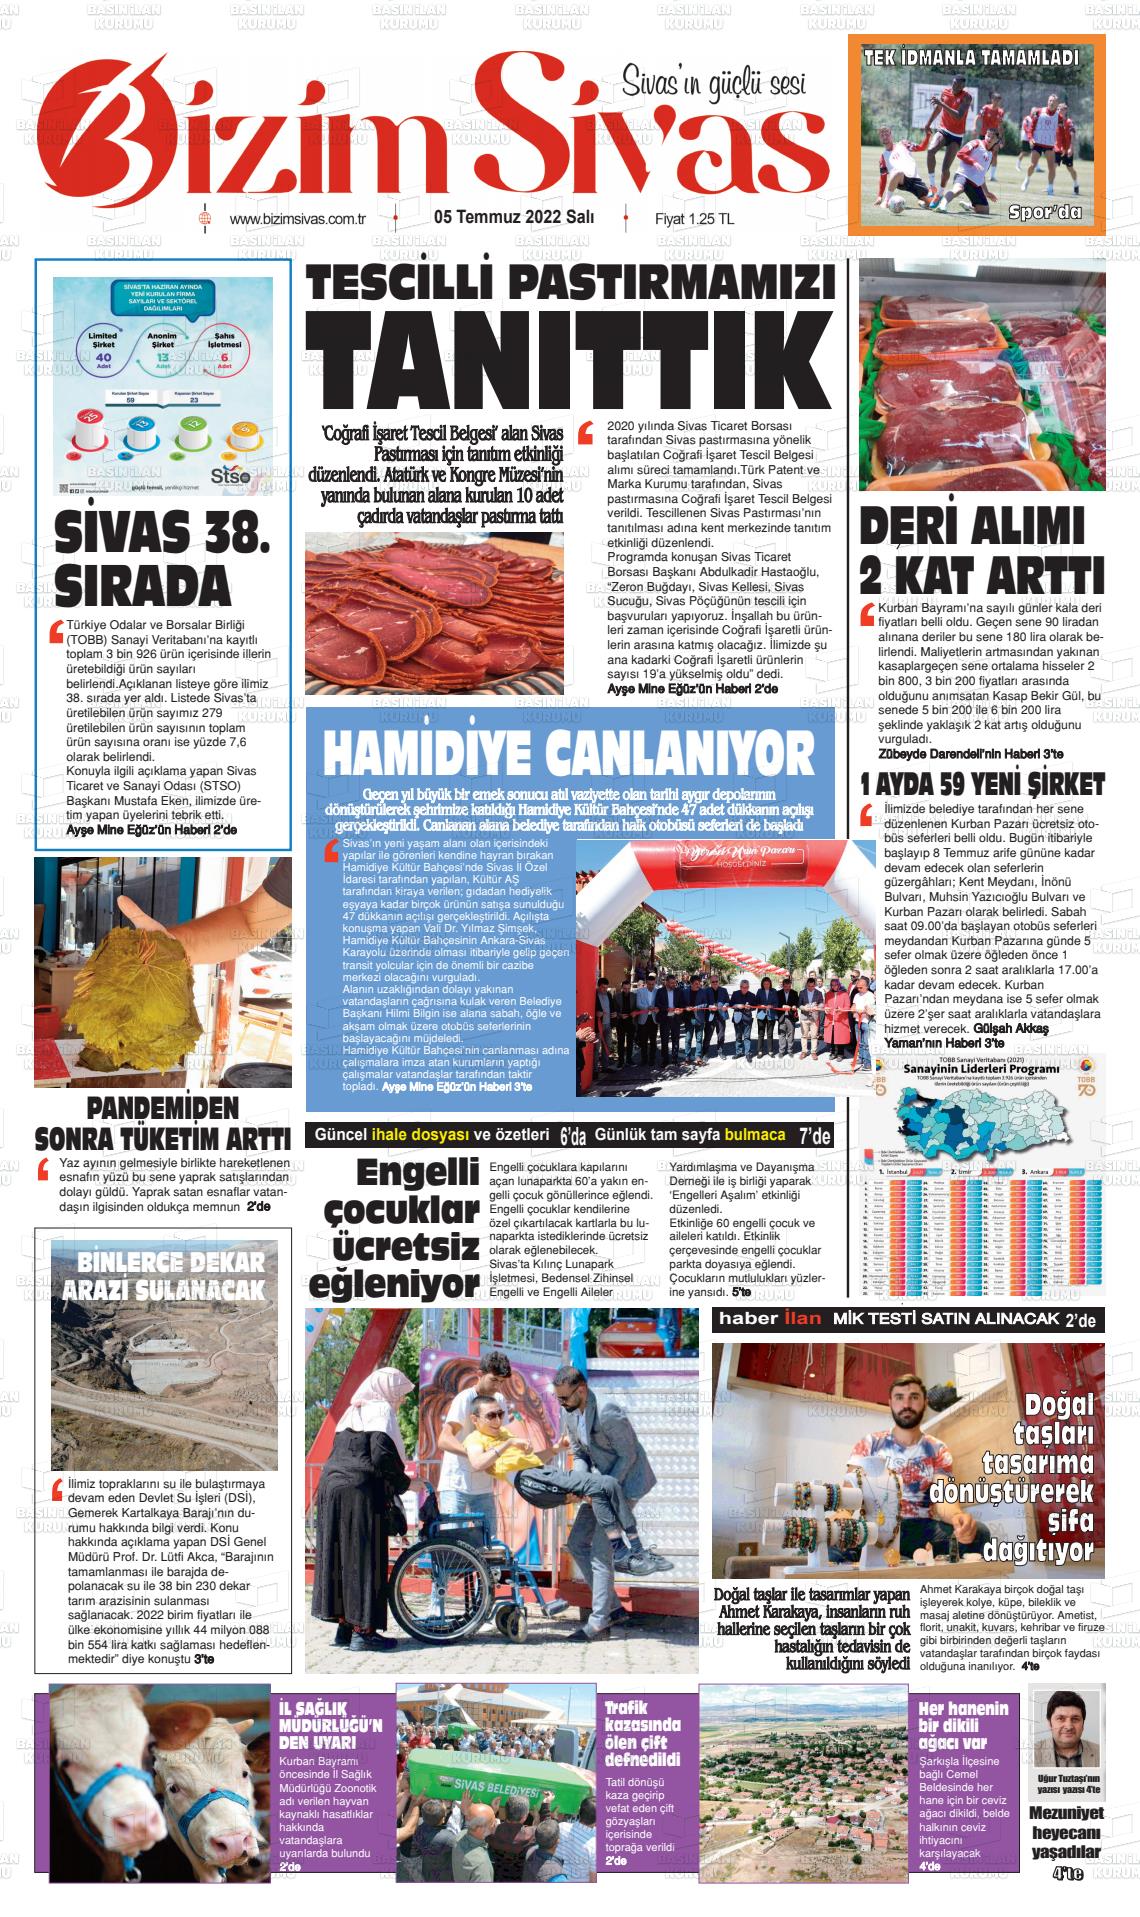 05 Temmuz 2022 Bizim Sivas Gazete Manşeti